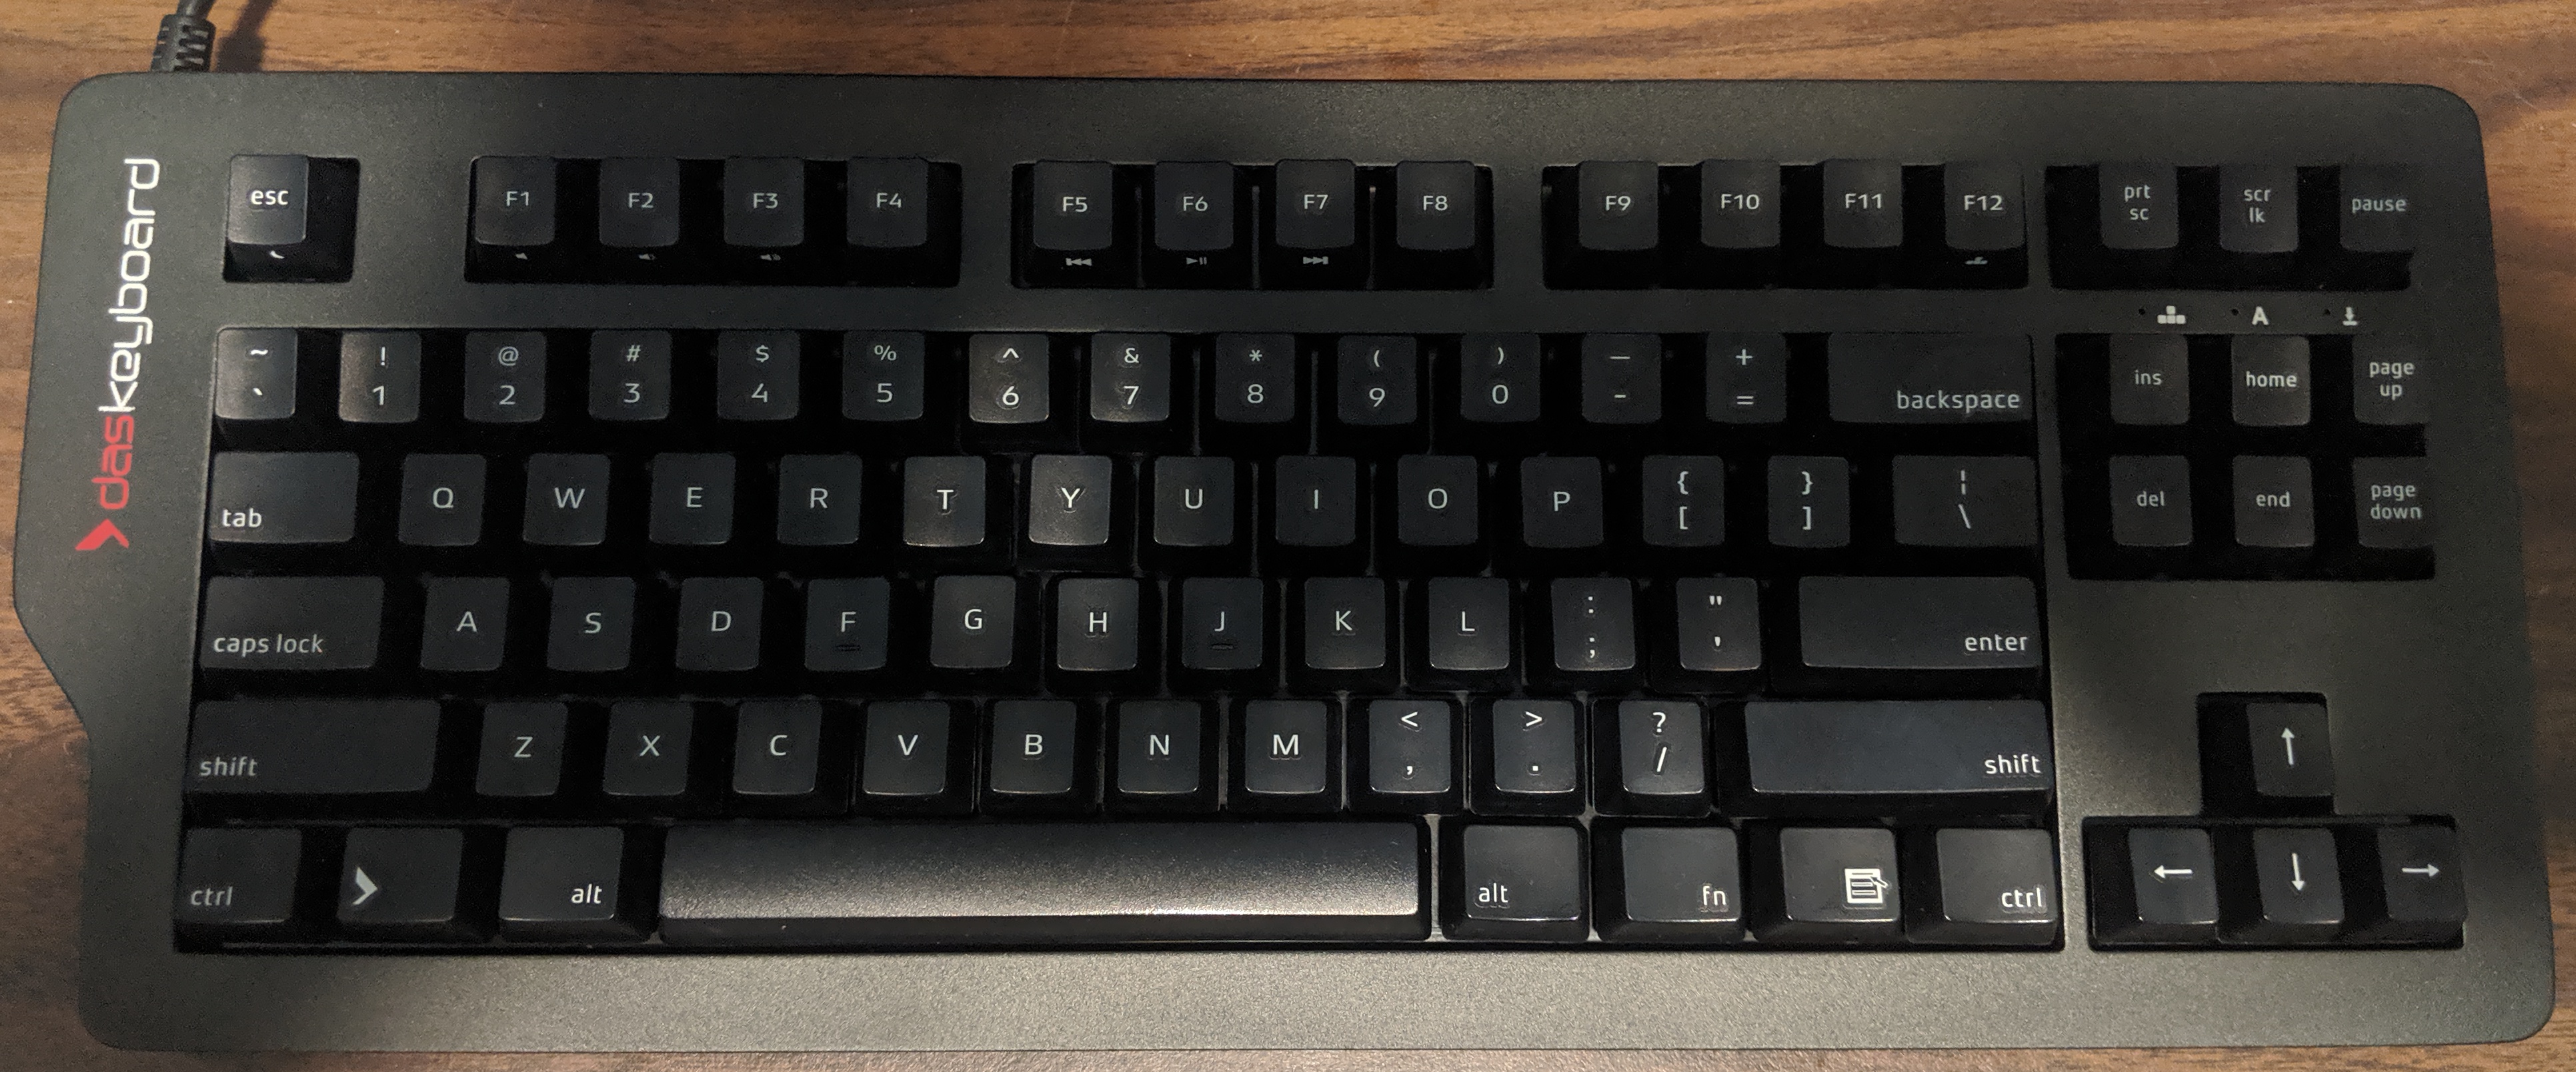 Das Keyboard 4C